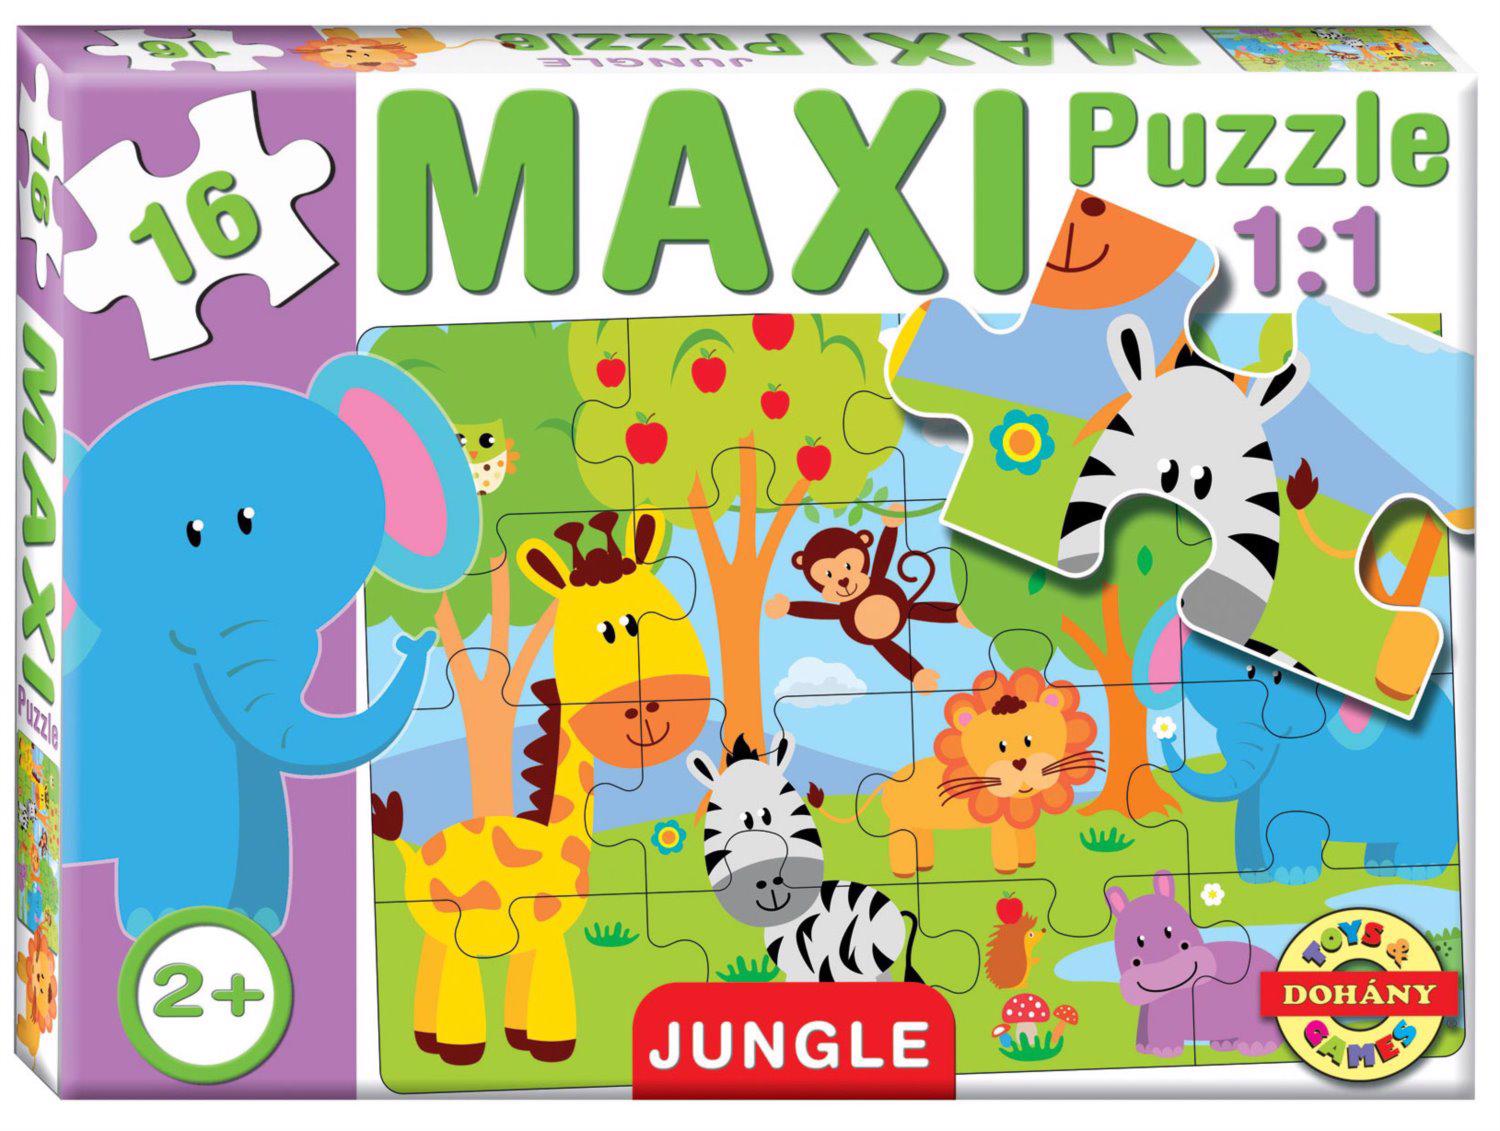 Puzzle Maxi Puzzle Jungle 16